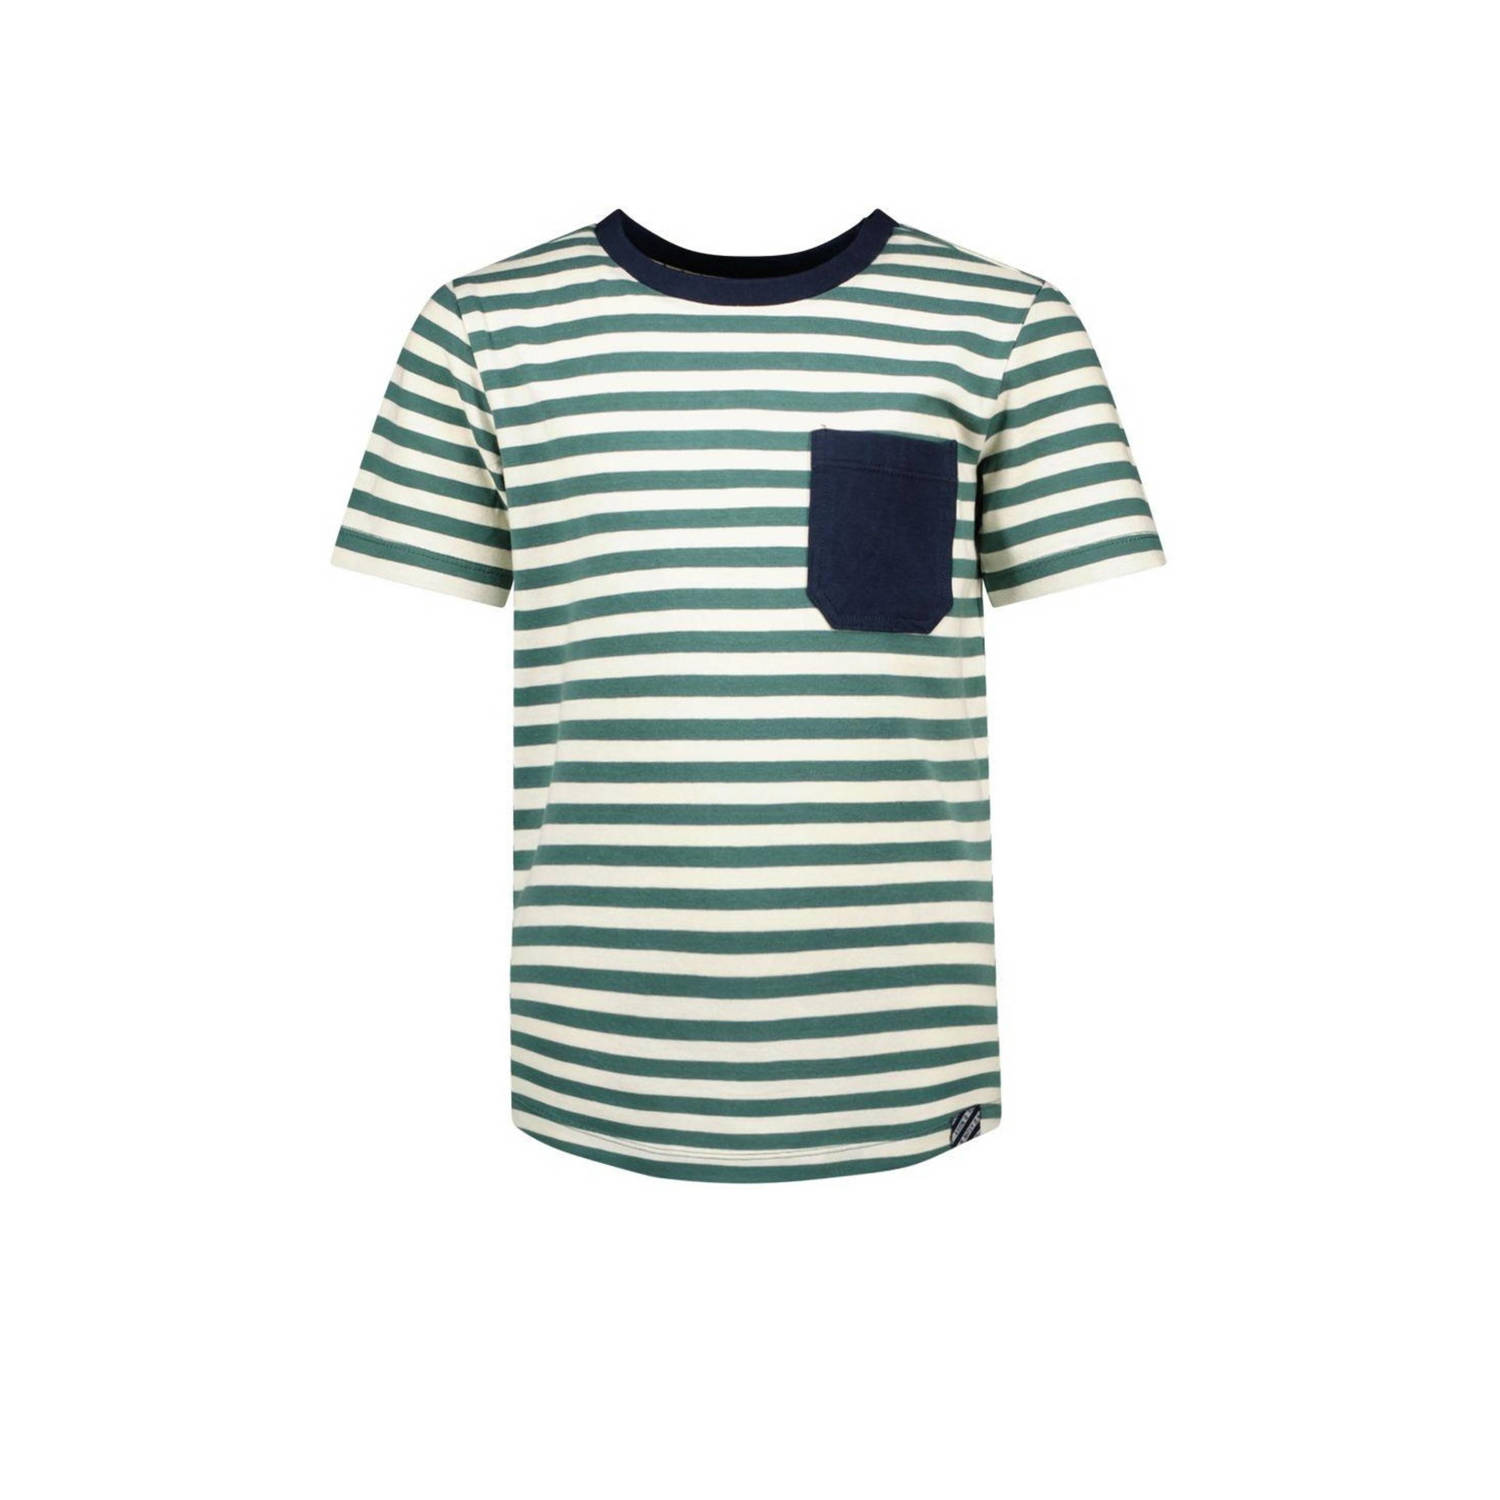 B.Nosy gestreept T-shirt Giel groen ecru donkerblauw